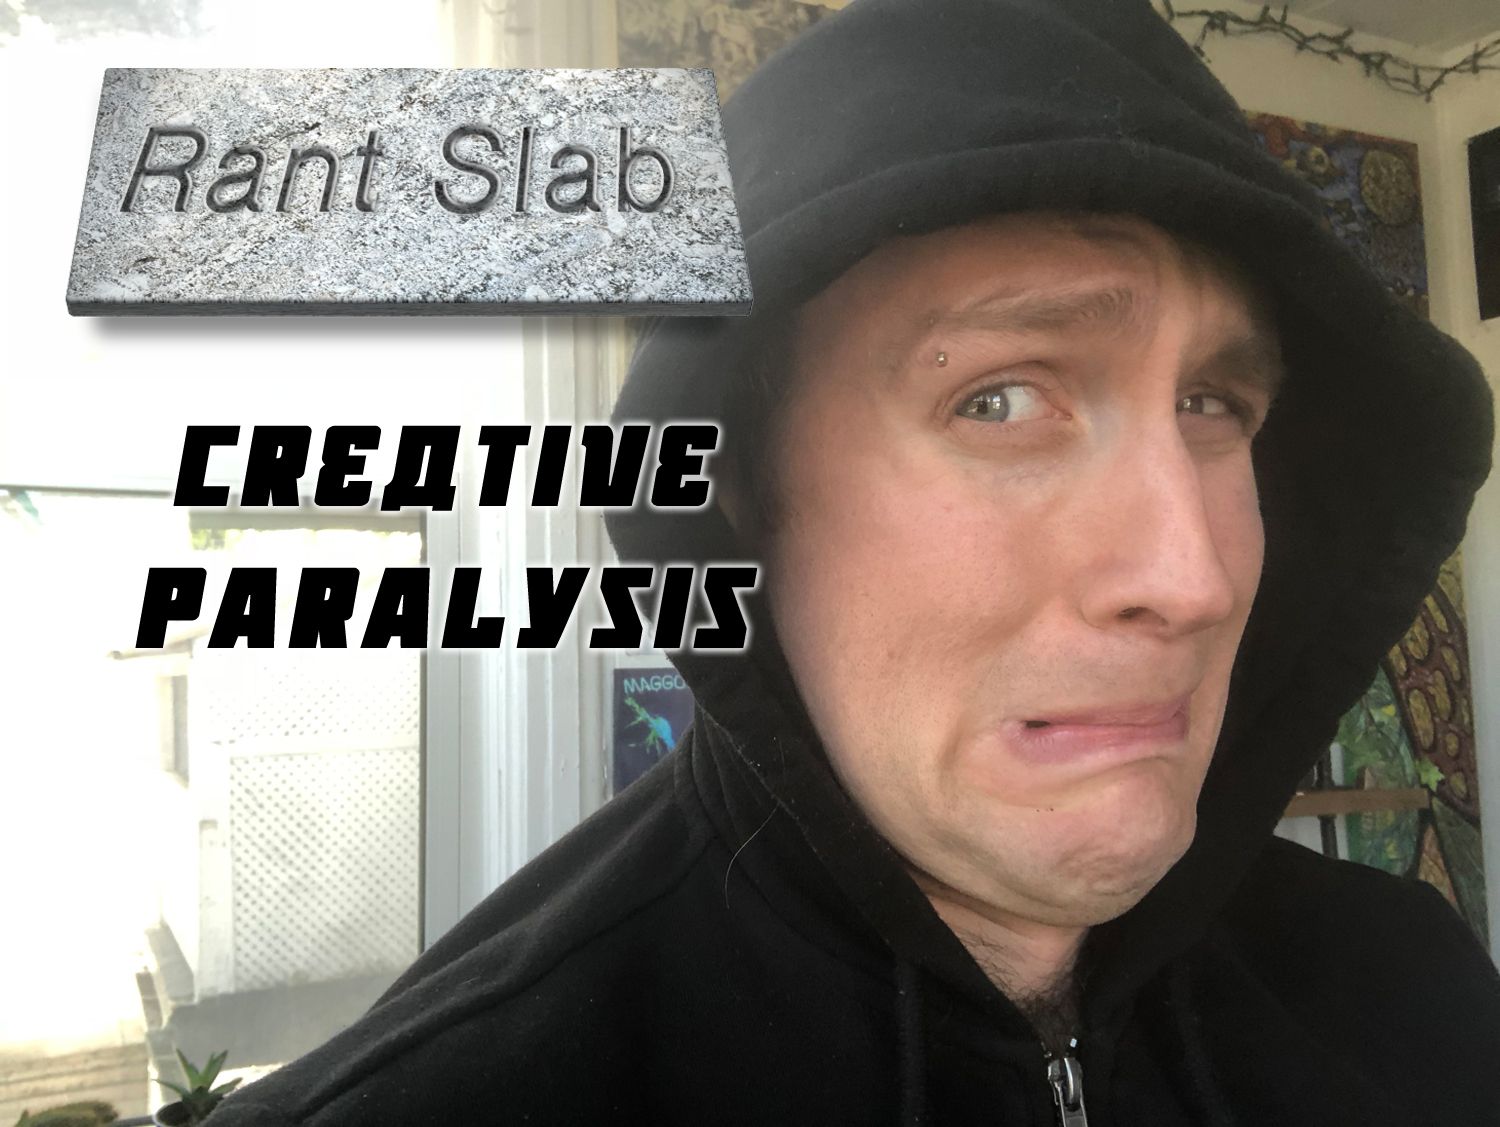 Rant-Slab Creative Paralysis.jpg